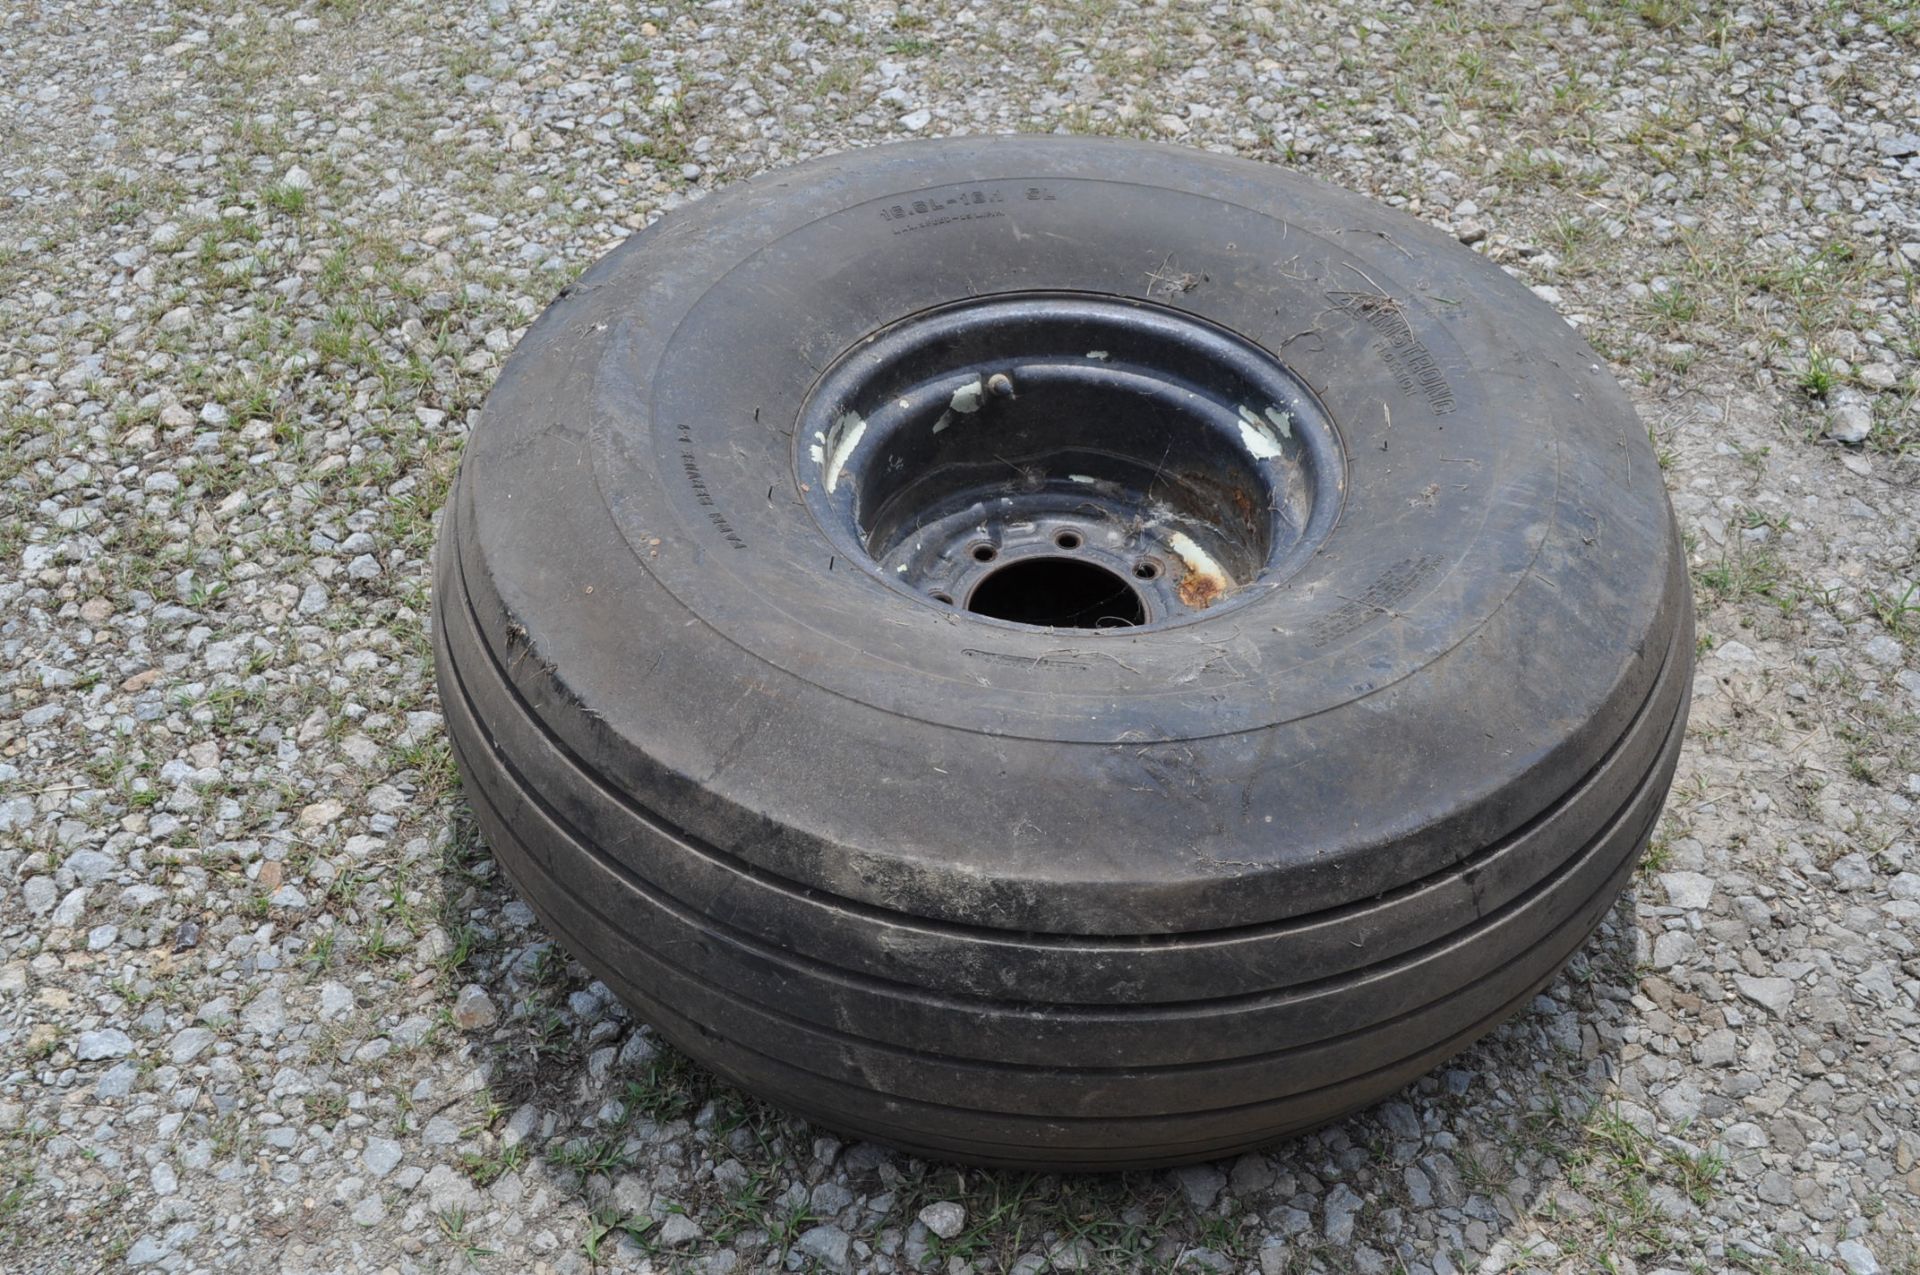 16.5L-16.1 SL tire and 8 bolt rim, Walters Farm Bob & Linda Wright - Jeffersonville, OH (740) 572-